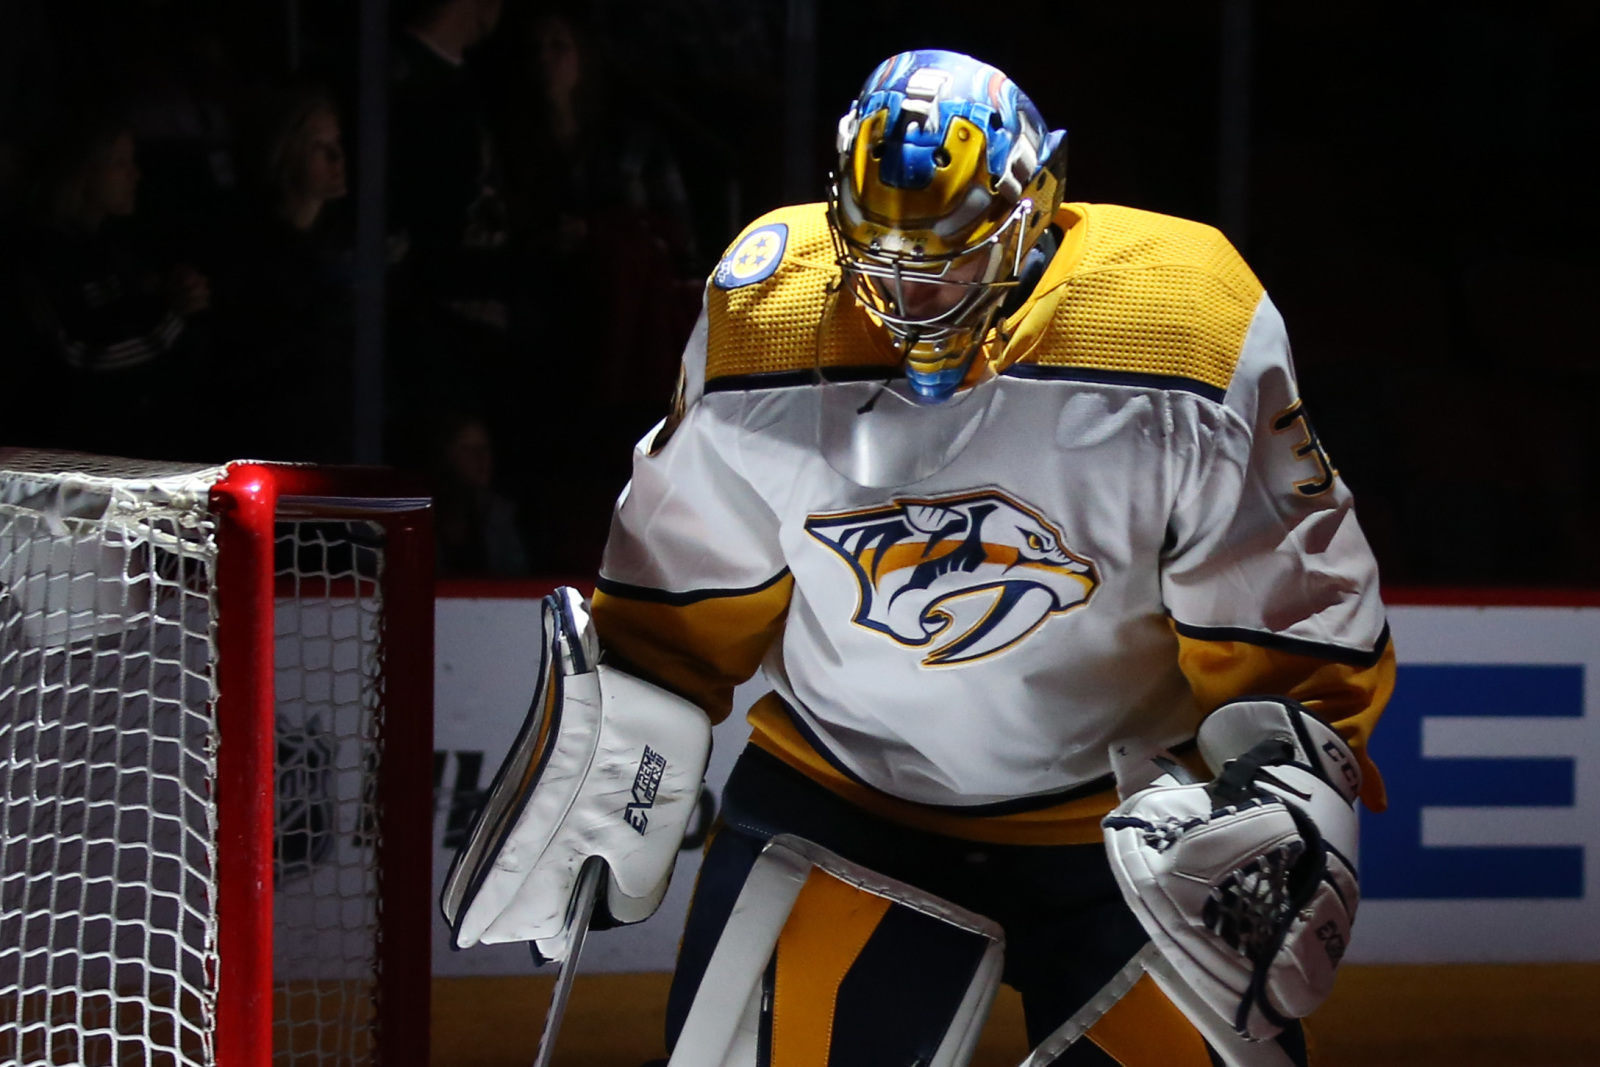 Nashville Predators goalie Pekka Rinne scores to help seal victory